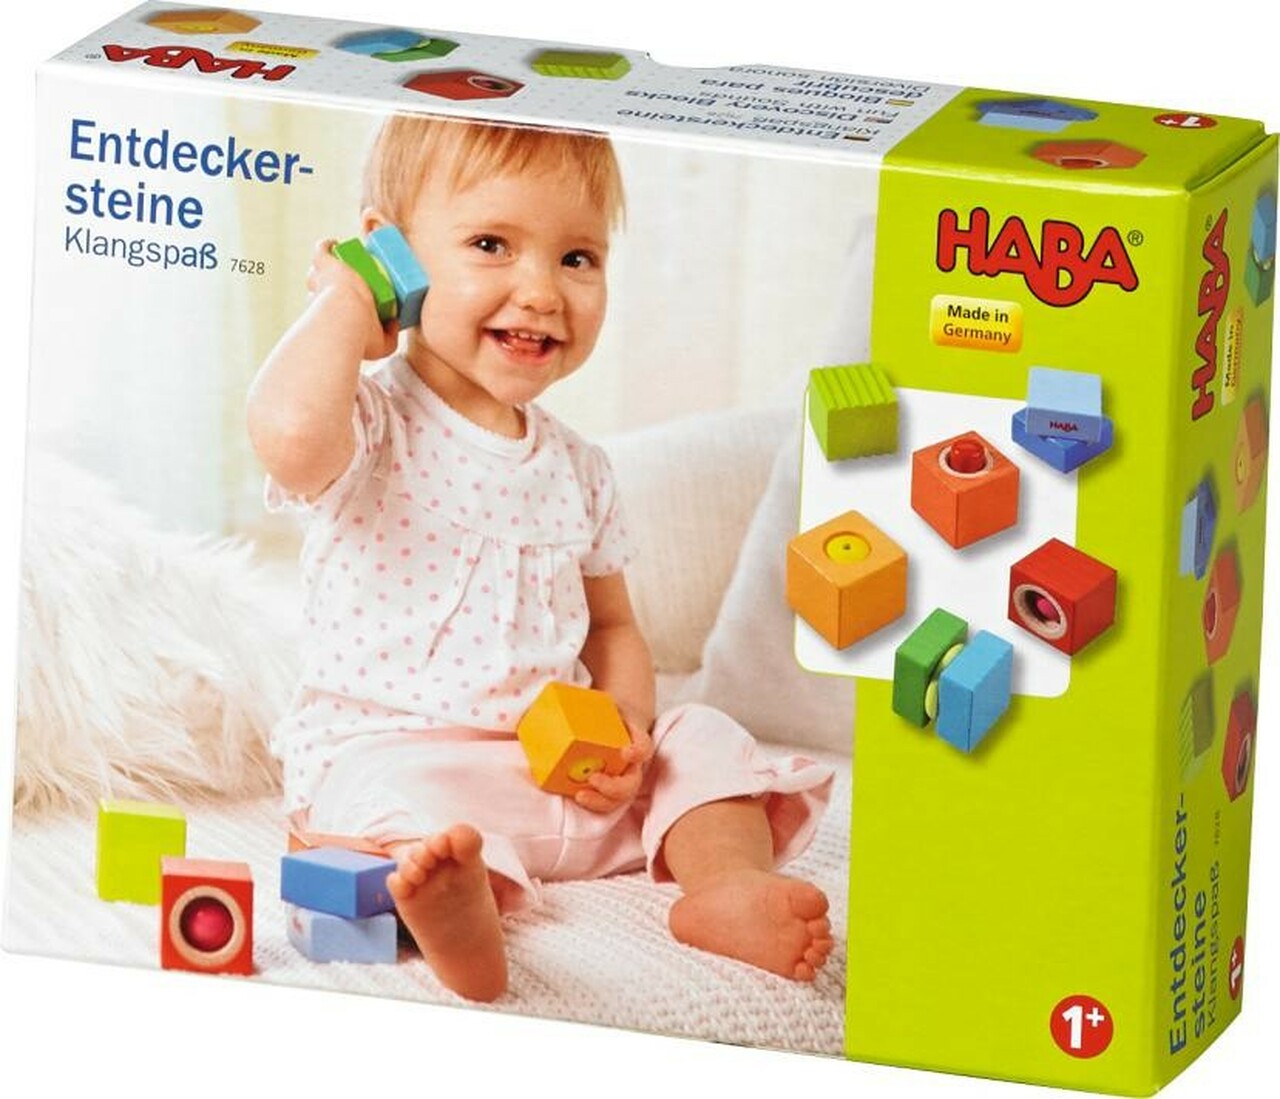 HABA Discovery Blocks s'amuse avec des sons 